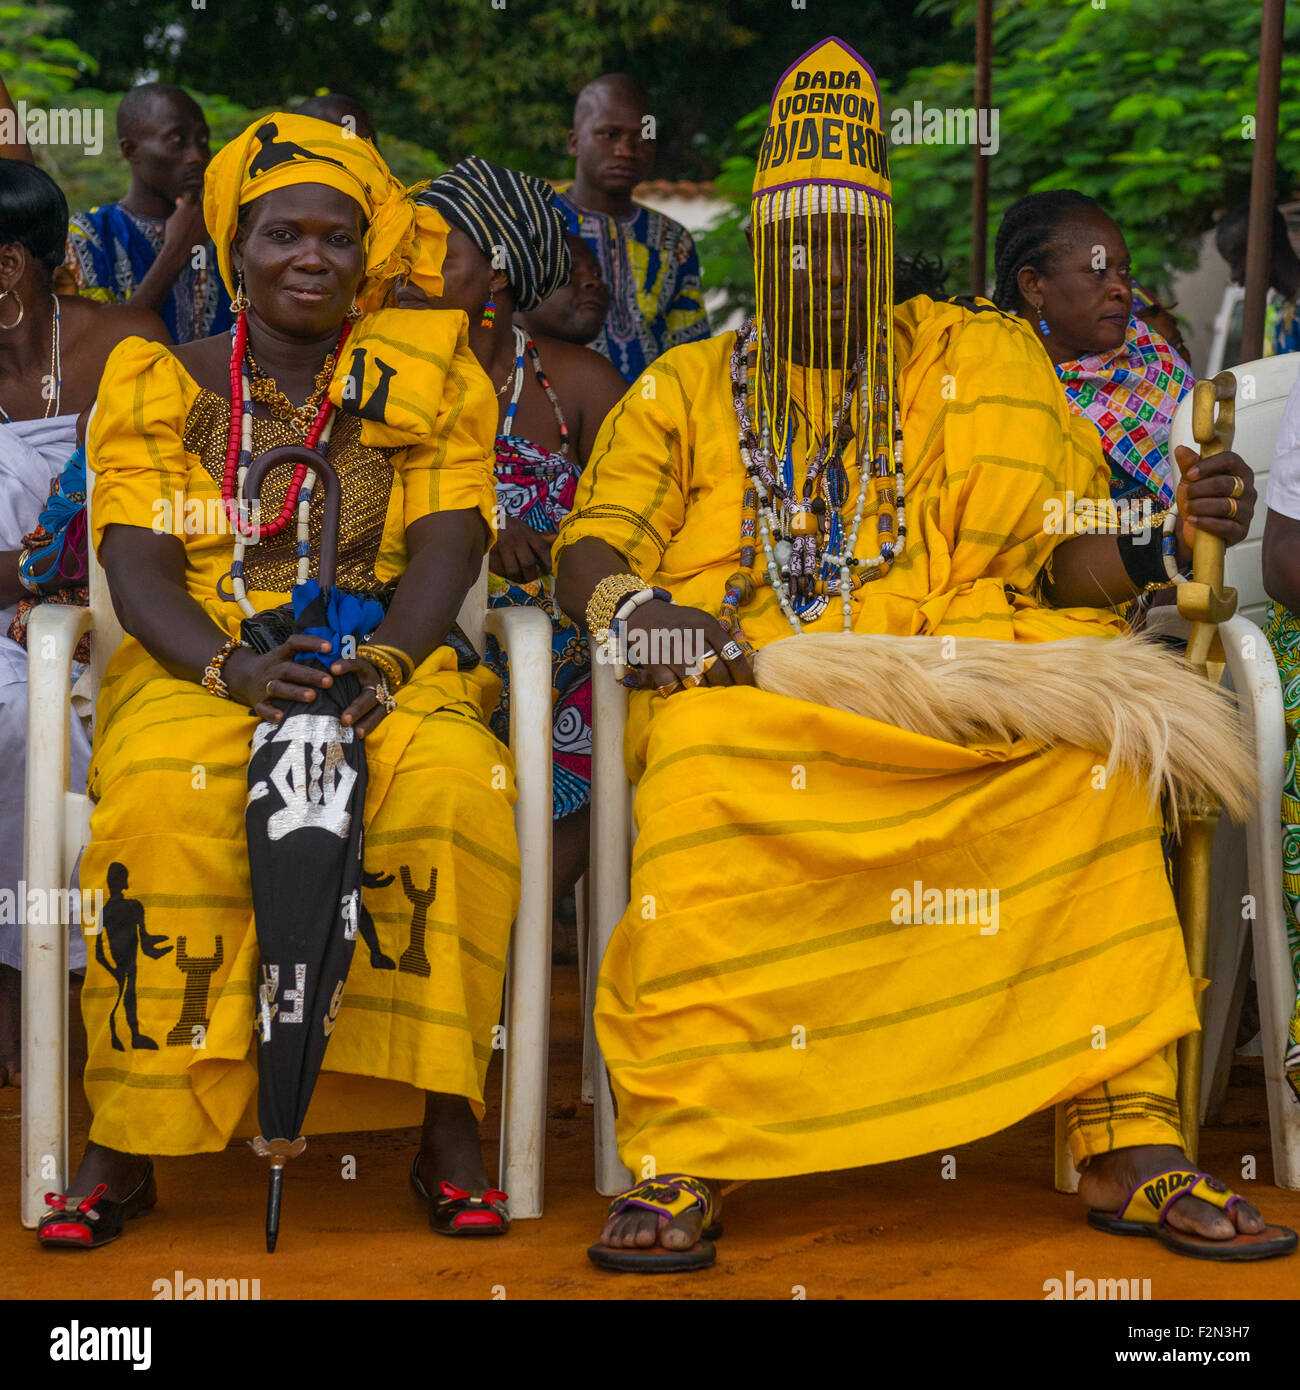 Benin, West Africa, Ouidah, dada vognon adidékon famous healer with a mask hiding his face Stock Photo